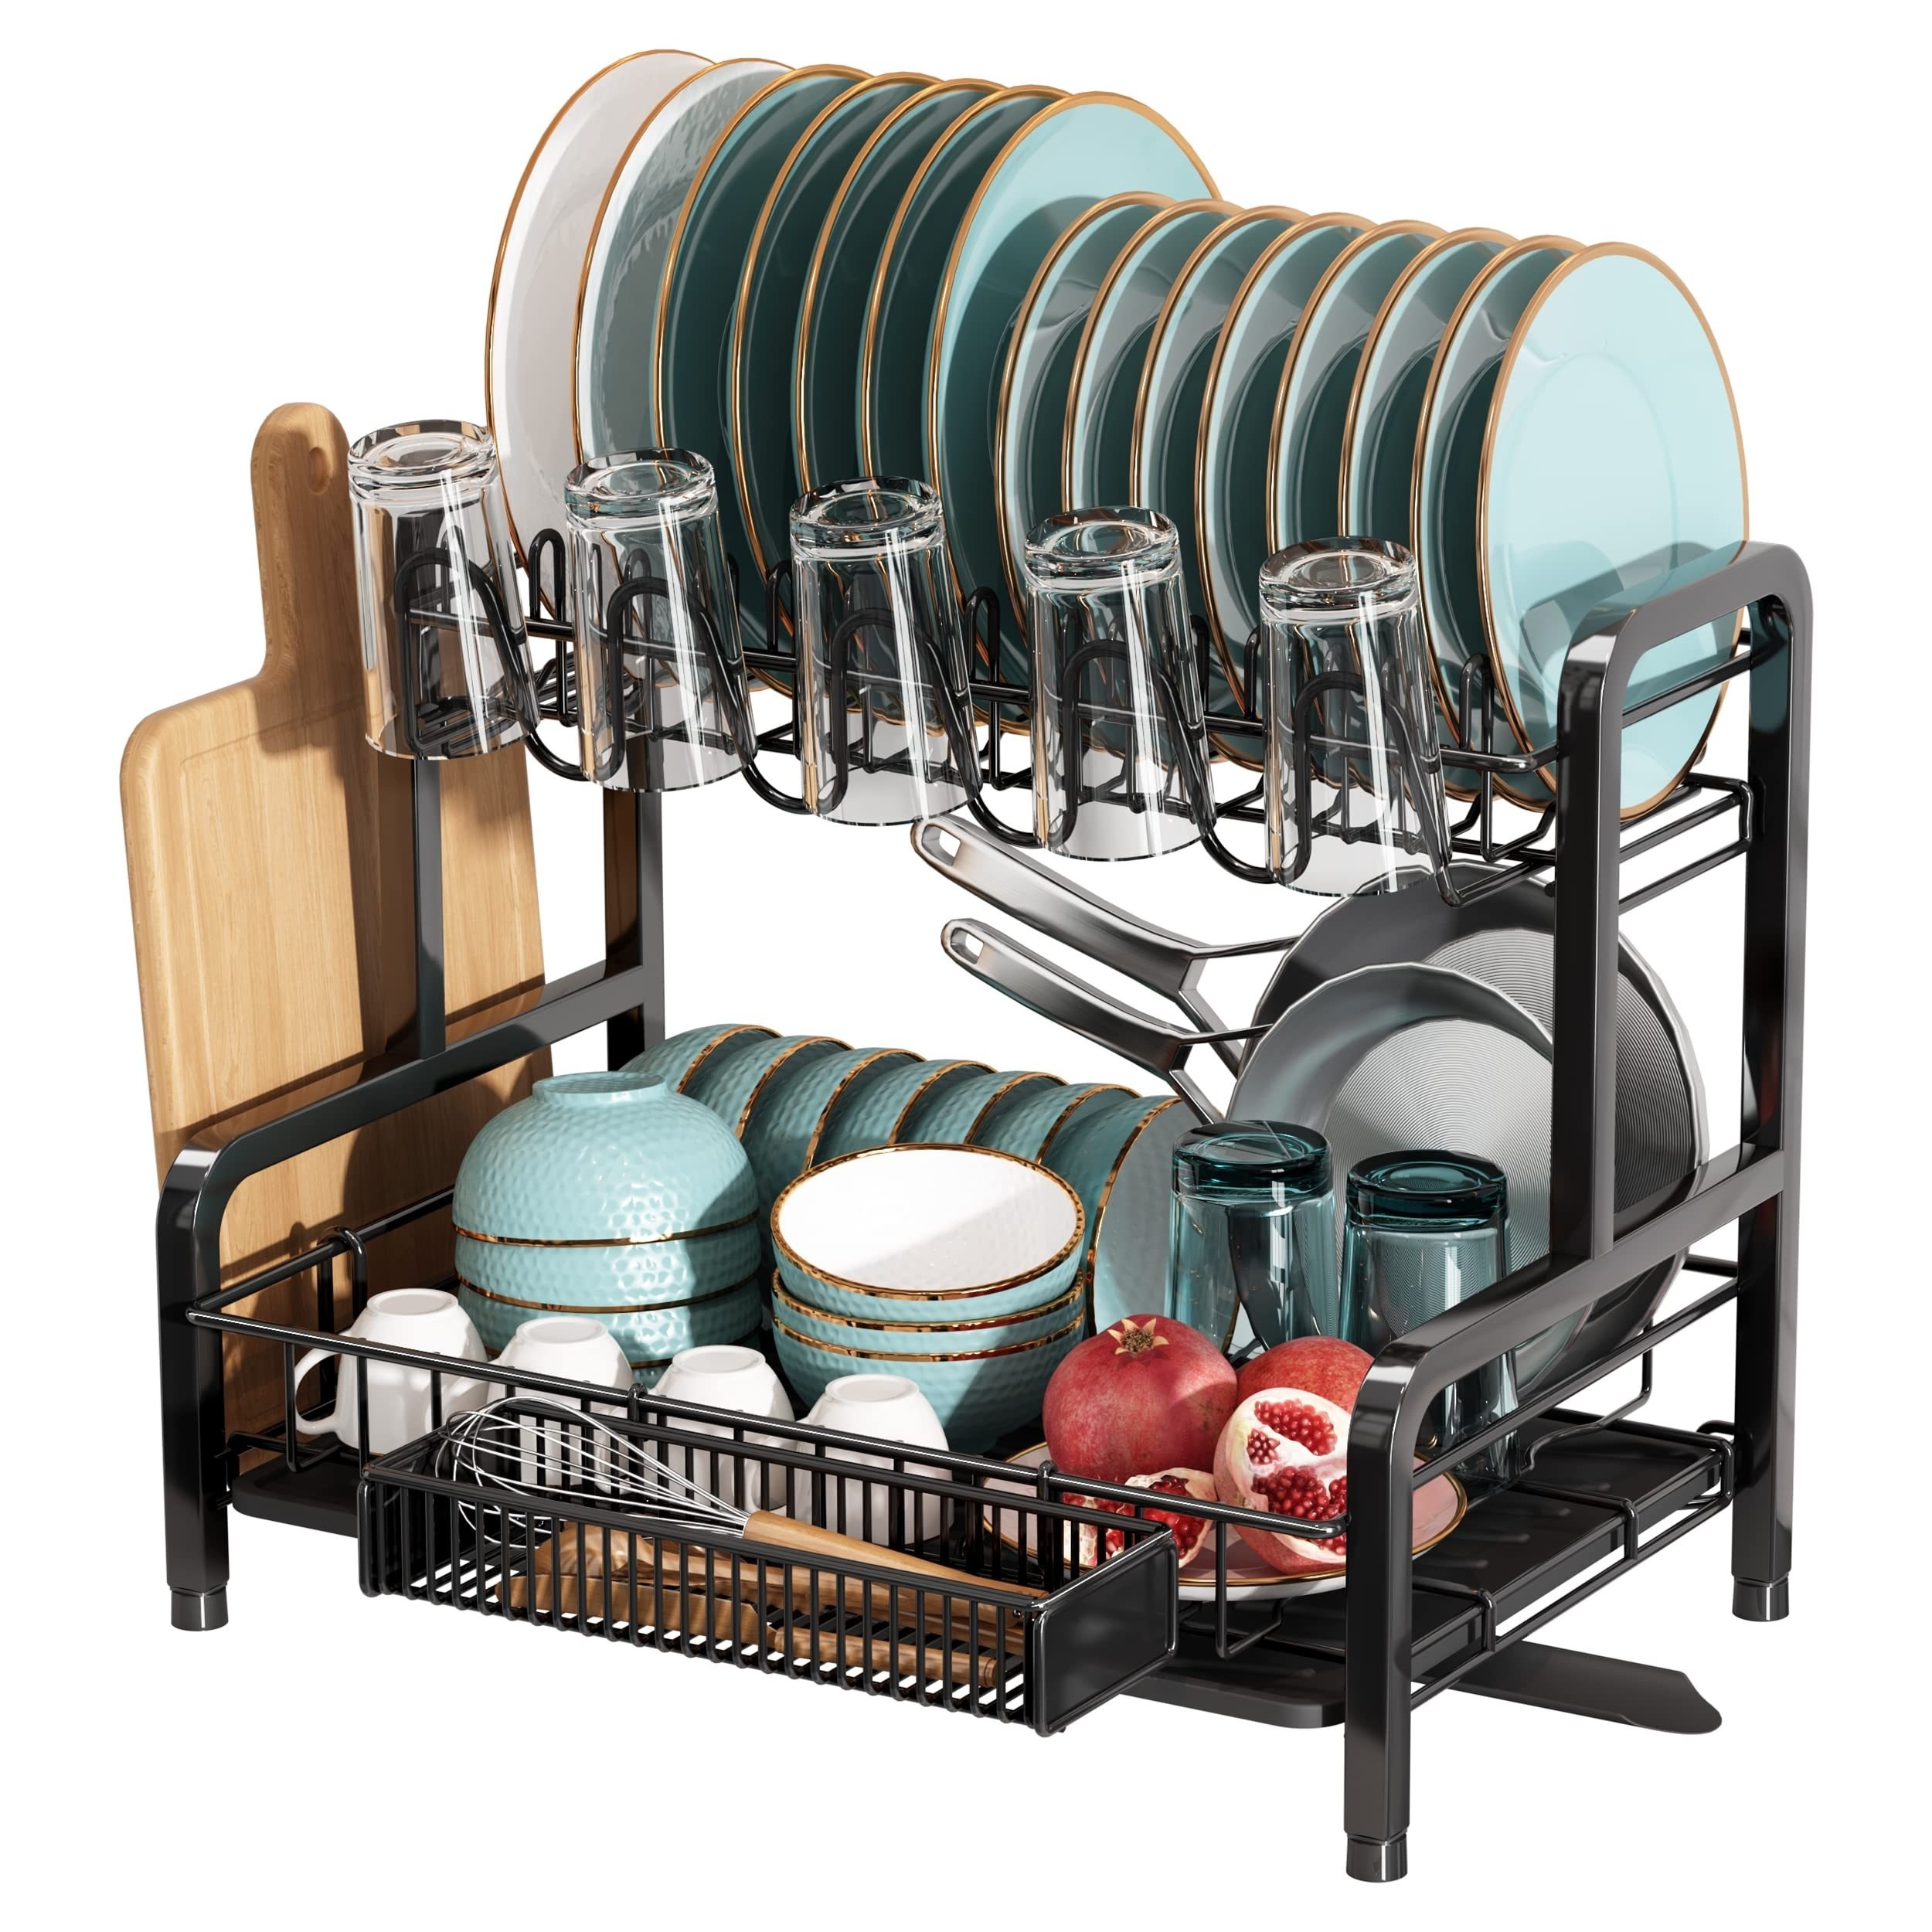 MAJALiS Large Dish Drying Rack Drainboard Set, 2 Tier Stainless Steel Dish  NEW n